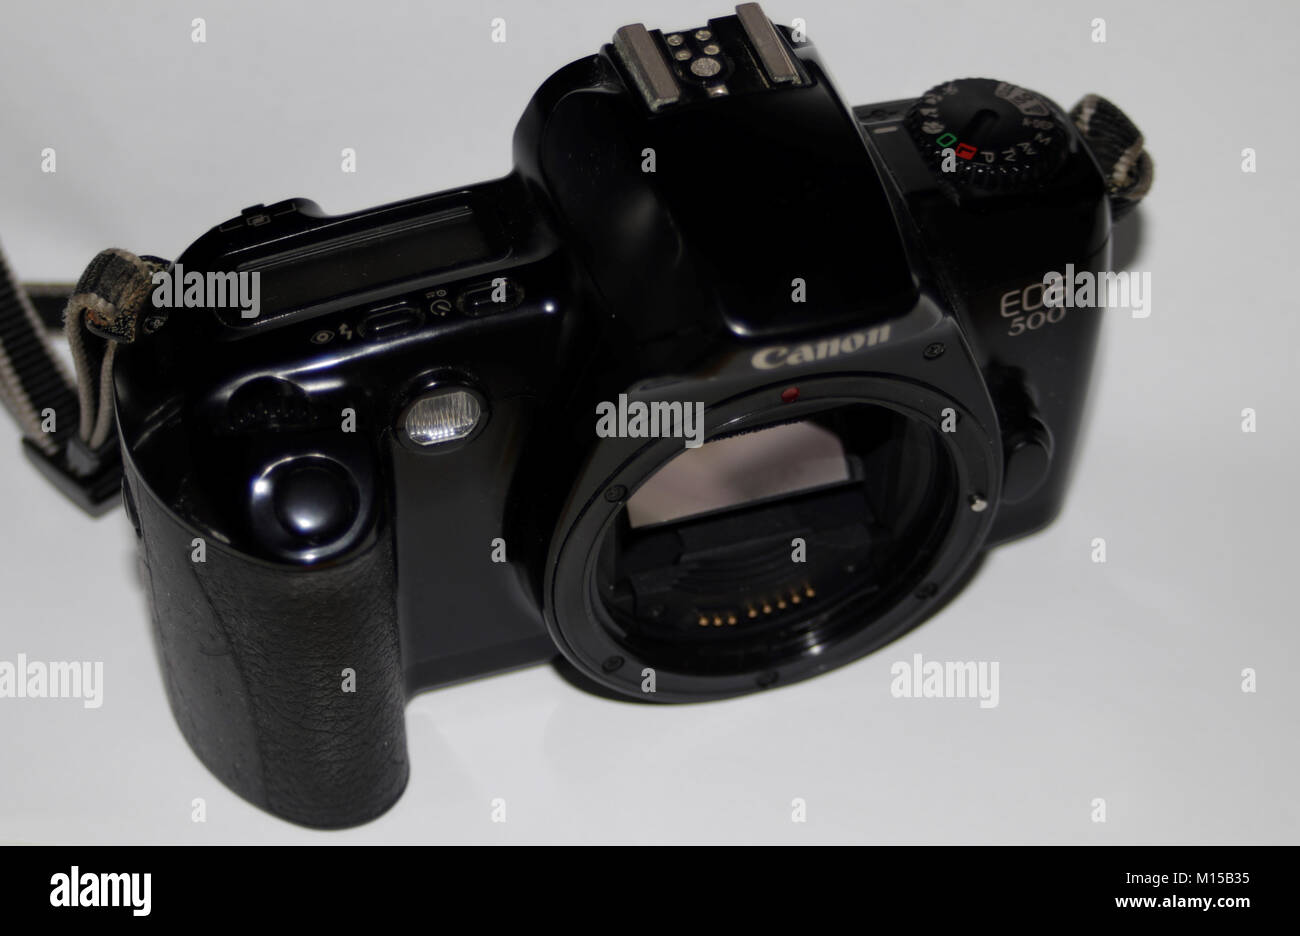 Canon Eos 500 Body from 1993 Stock Photo